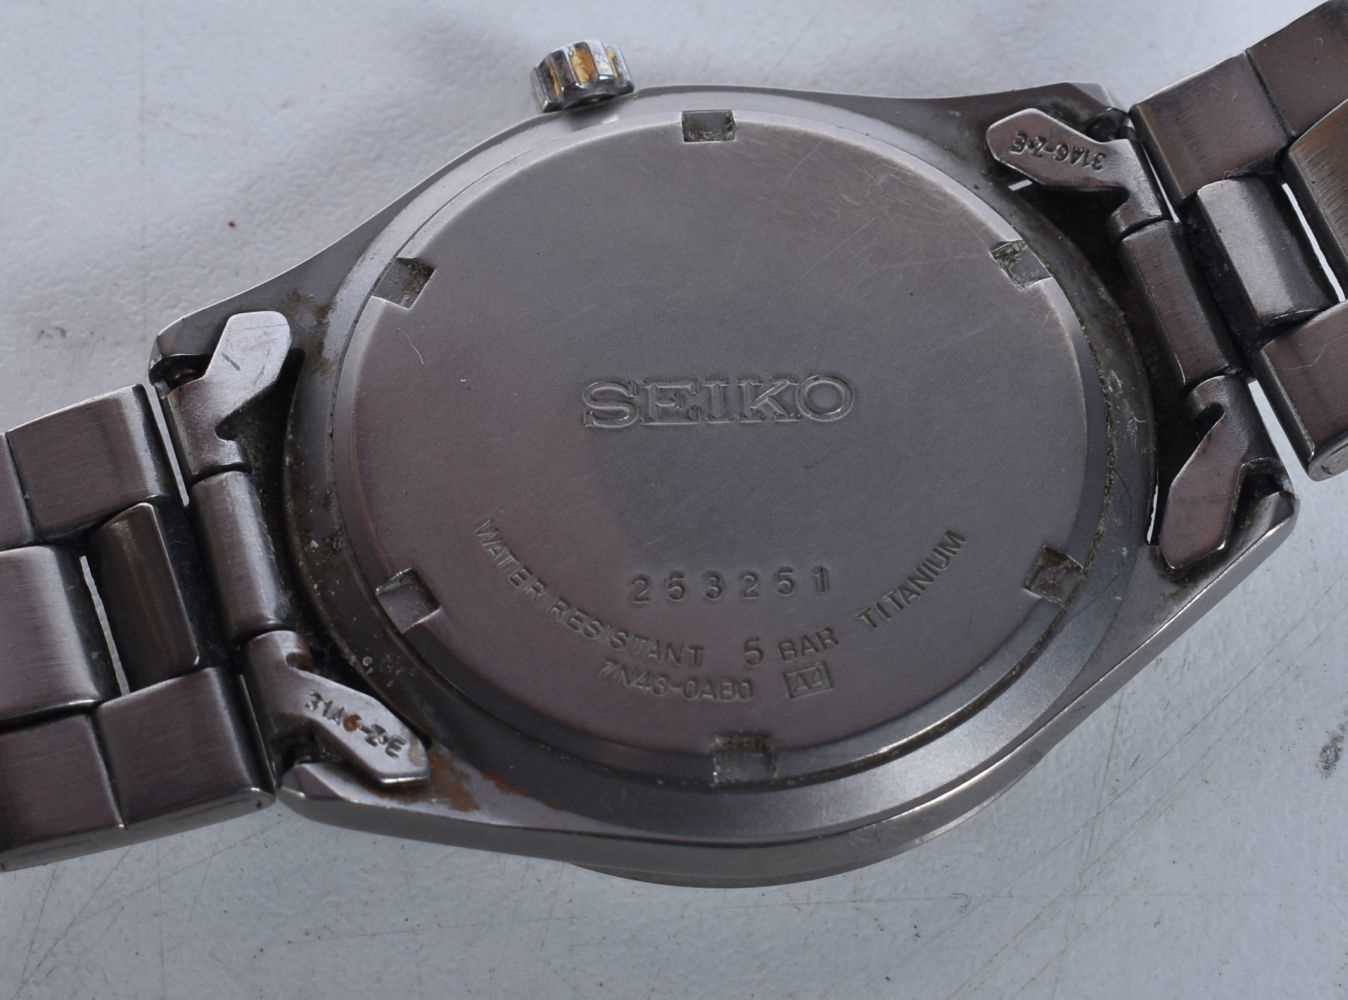 Vintage Seiko Titanium watch, 34mm x 40mm, 18mm bracelet width. Quartz. Working - Image 2 of 3